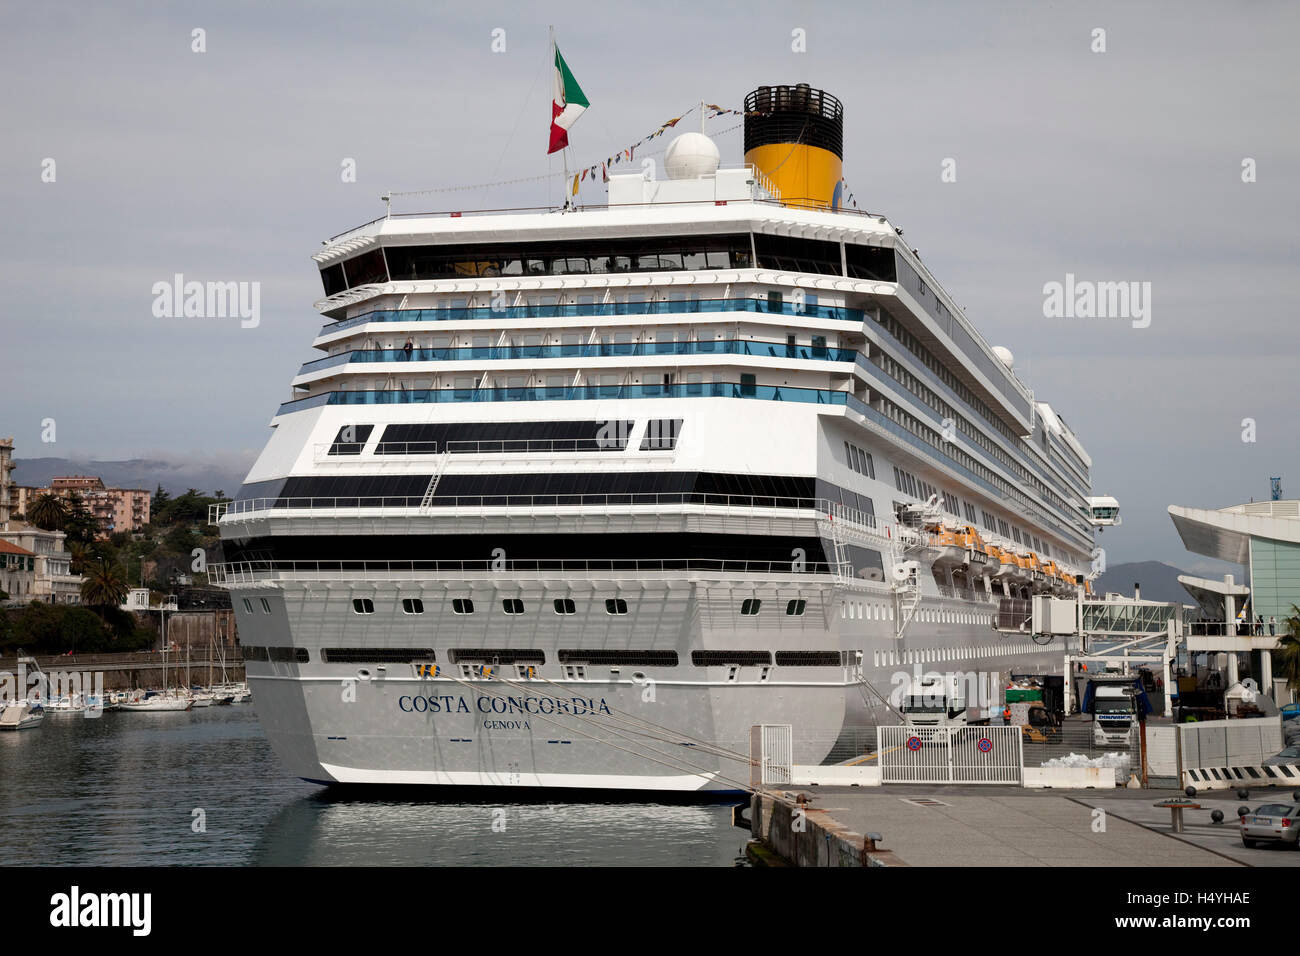 Cruise liner Costa Concordia in the harbour, Savona, Italian Riviera, Liguria, Italy, Europe Stock Photo